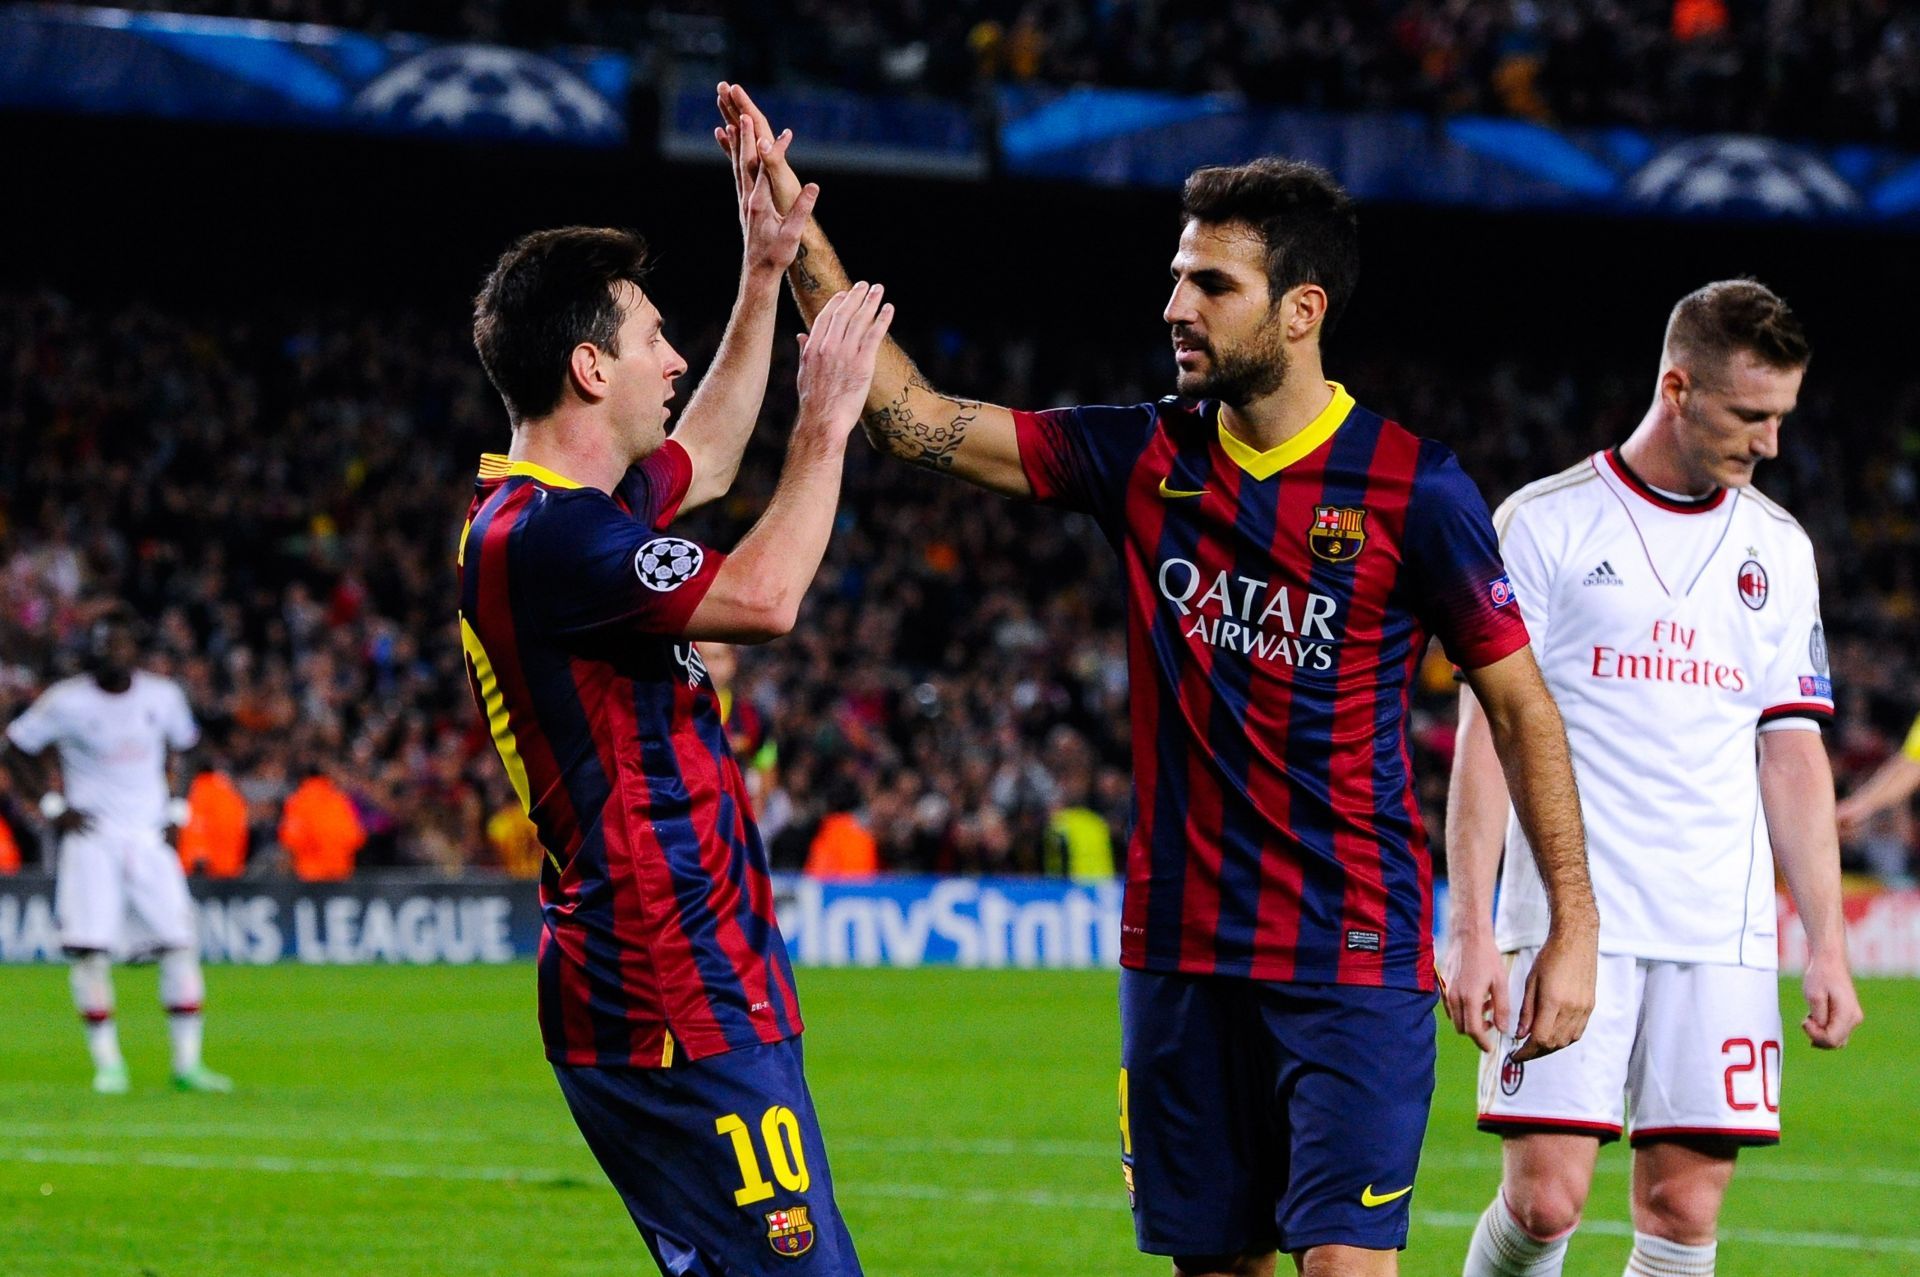 Lionel Messi and Cesc Fabregas (via Getty Images)